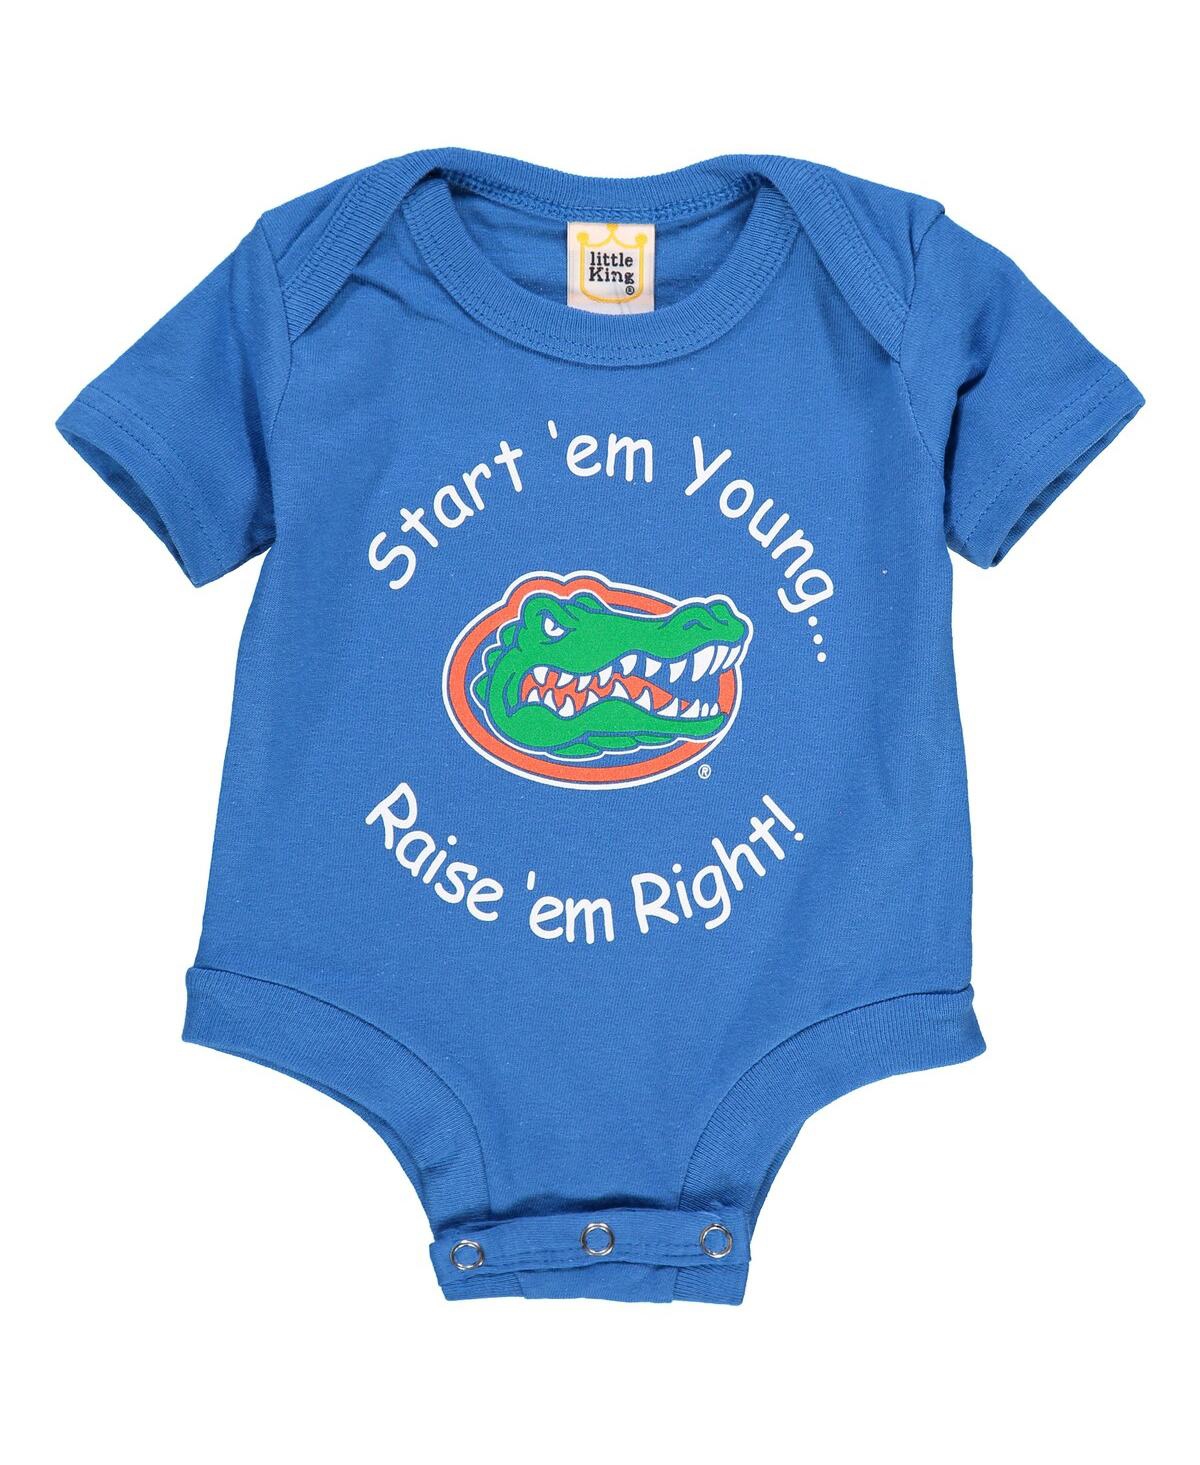 Little King Apparel Babies' Newborn And Infant Boys And Girls Royal Florida Gators Start 'em Young Bodysuit